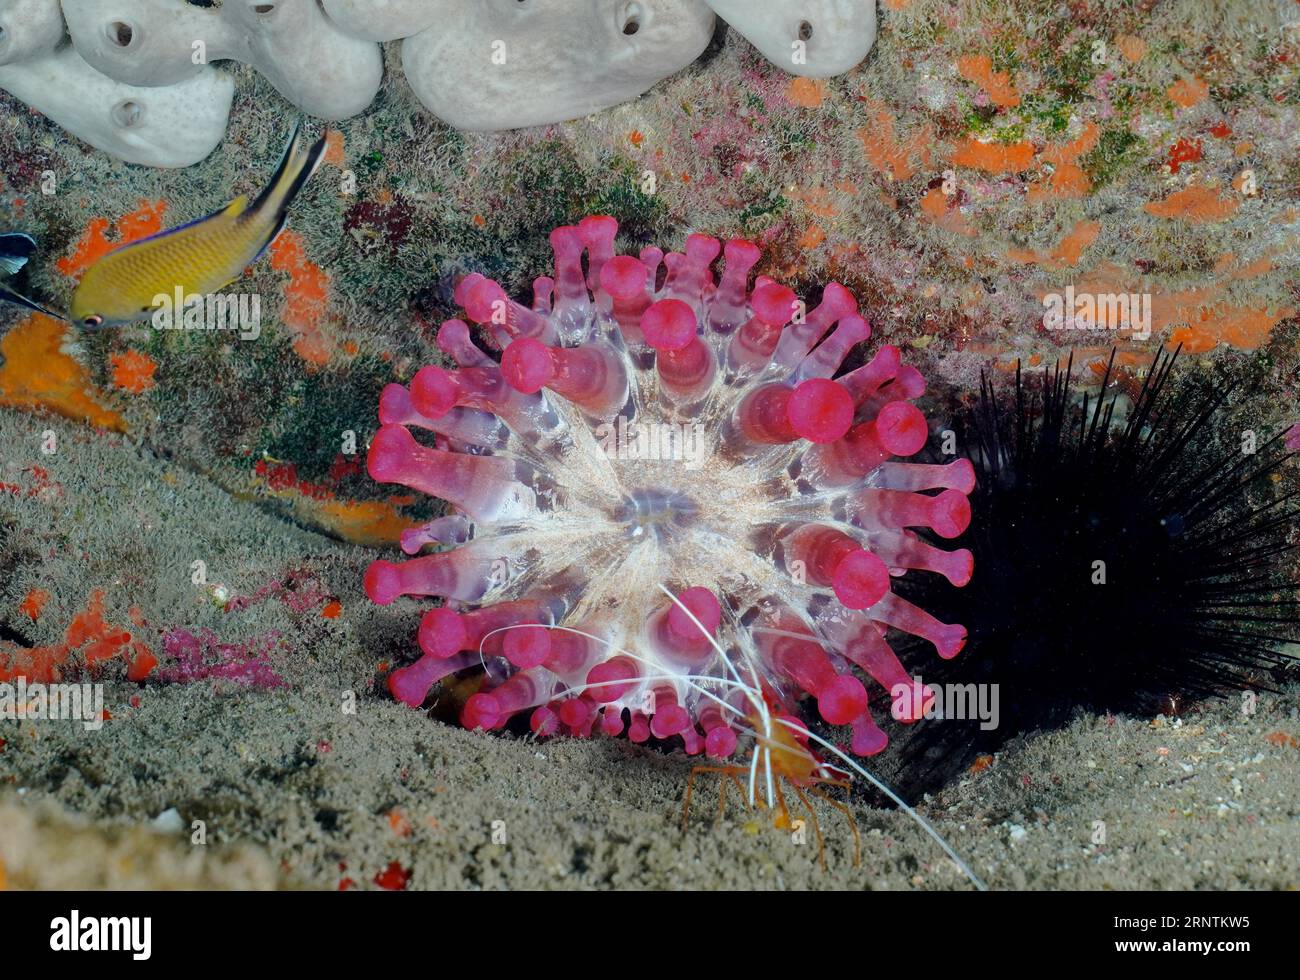 Pink club-tipped anemone (Telmatactis cricoides) with Atlantic pacific cleaner shrimp (Lysmata grabhami), El Cabron marine reserve dive site, Tufia Stock Photo